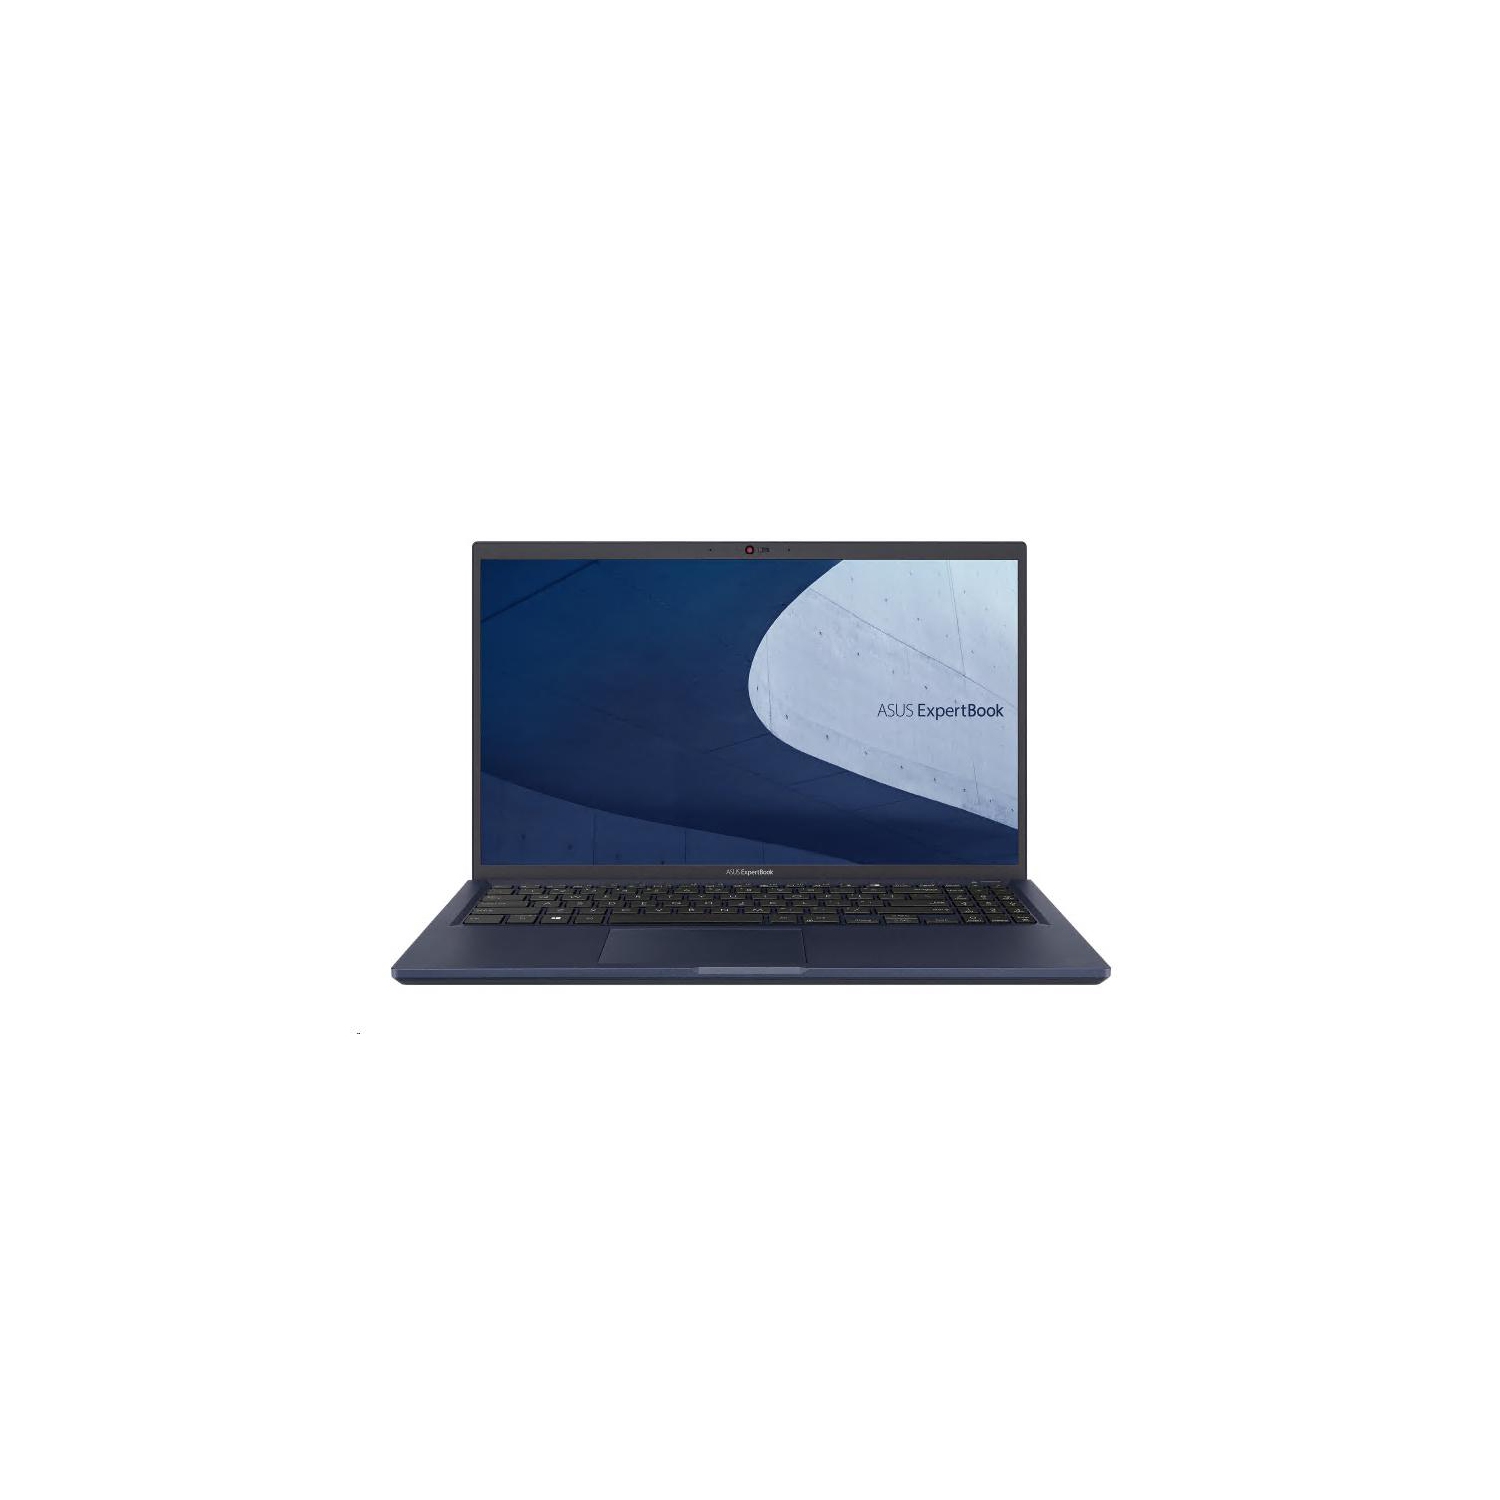 Asus ExpertBook B Series 15.6" Business Laptop - Star Black (Intel Core i7 1165G7/12GB RAM/512GB SSD/Win 10 Pro)-(B1500CEAE-C73P-CA)- 3 Year Warranty